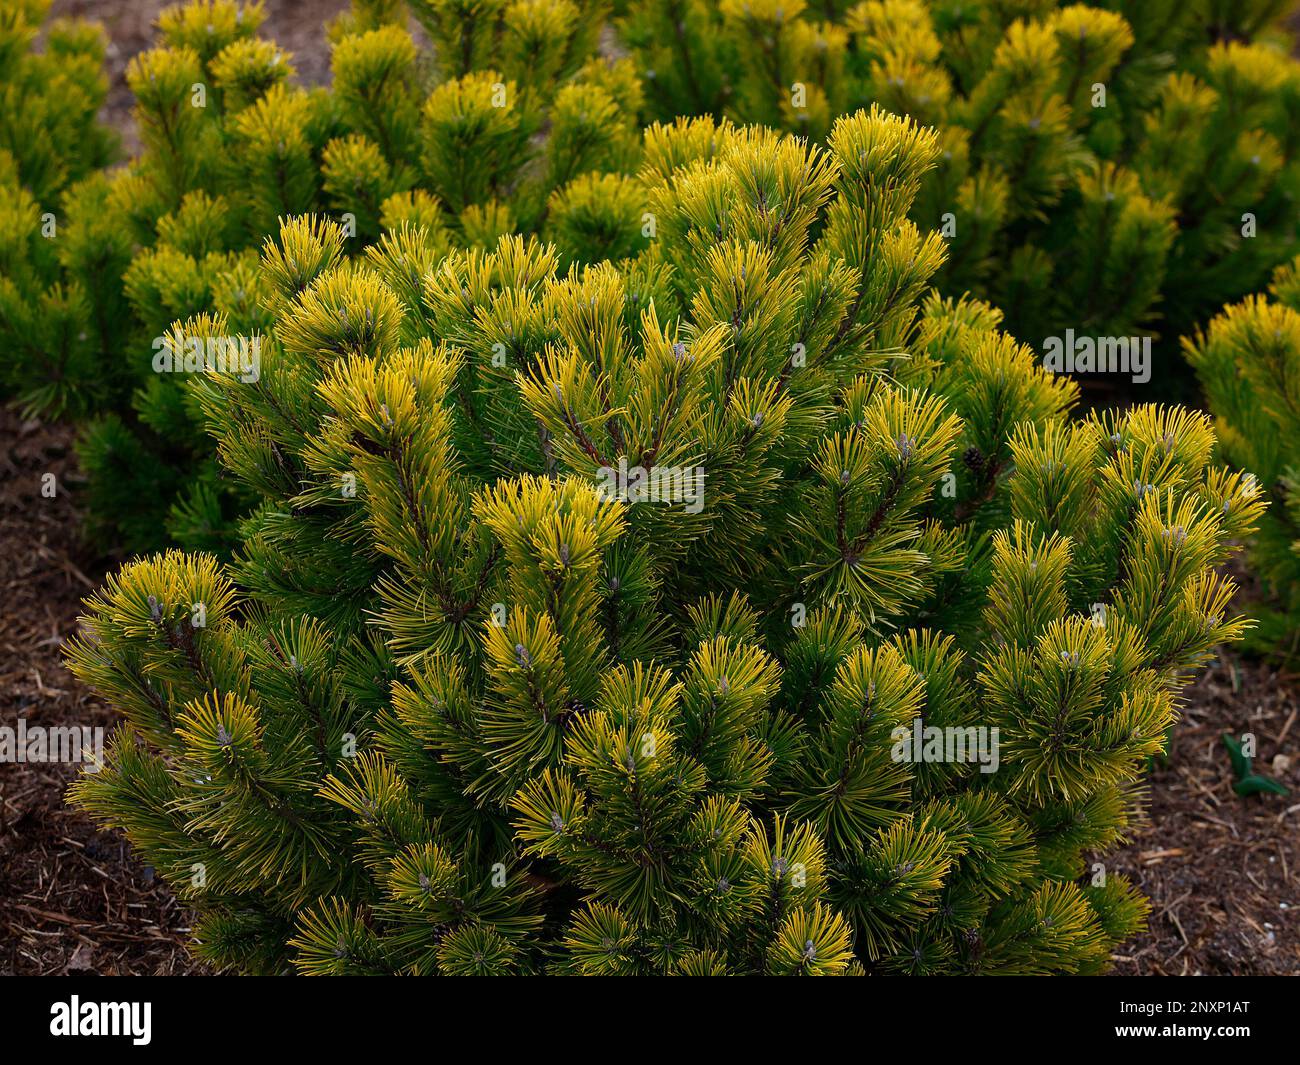 Closeup of the yellow evergreen conifer pine Pinus mugo Winter Gold. Stock Photo